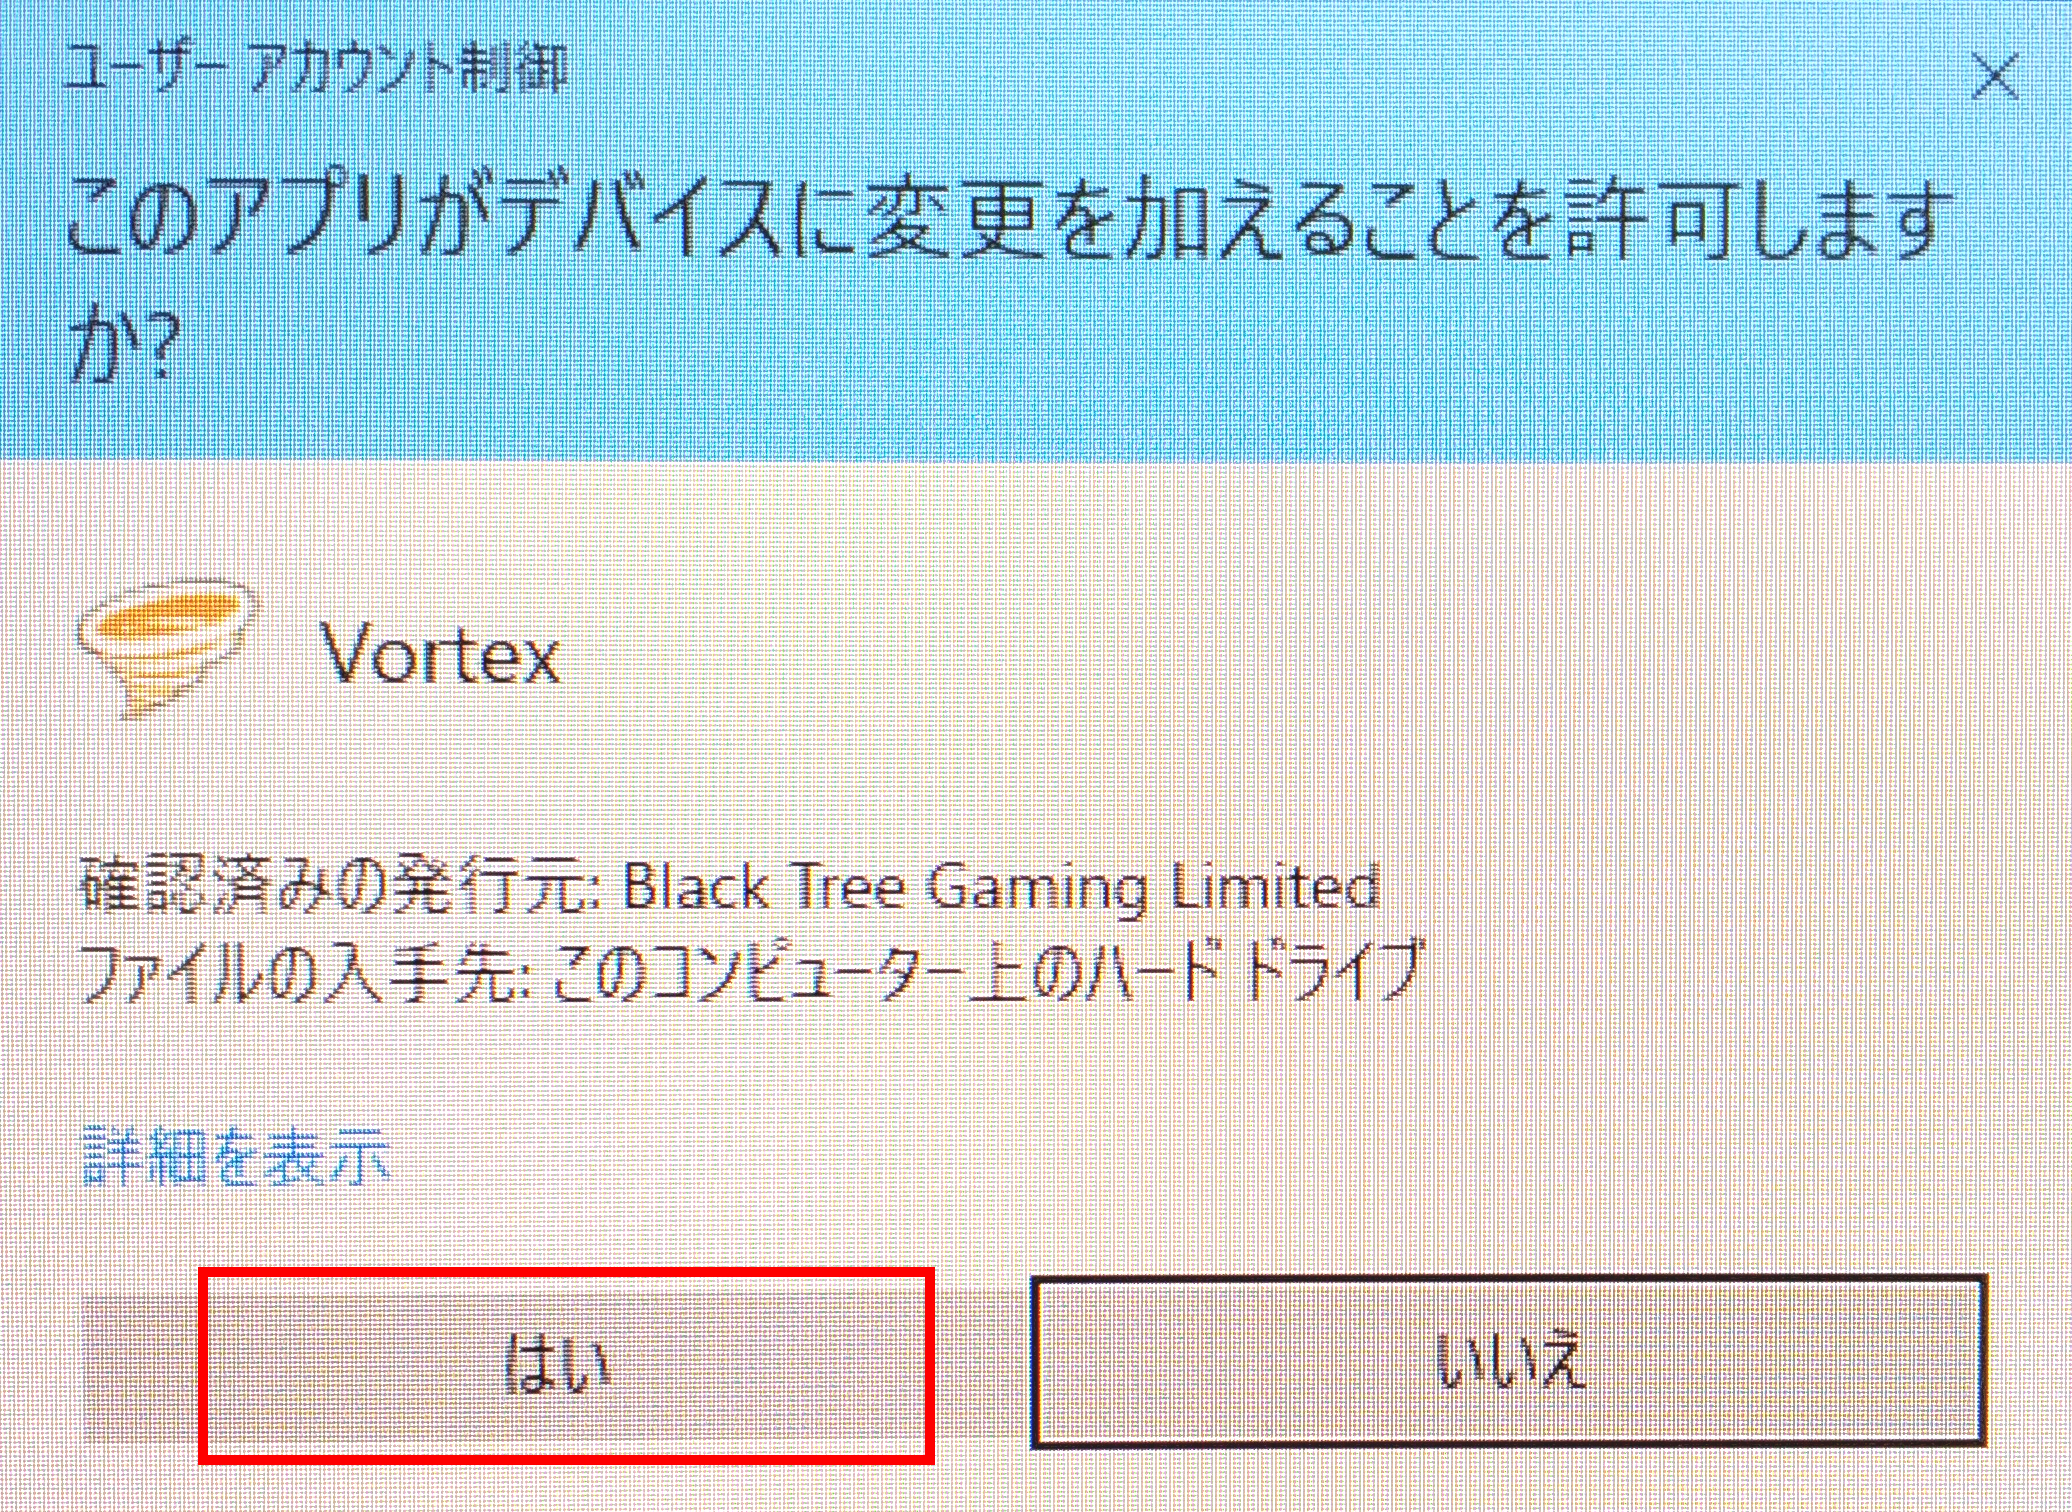 Vortex インストール 日本語化の方法をわかりやすく解説 Bovod Bovod